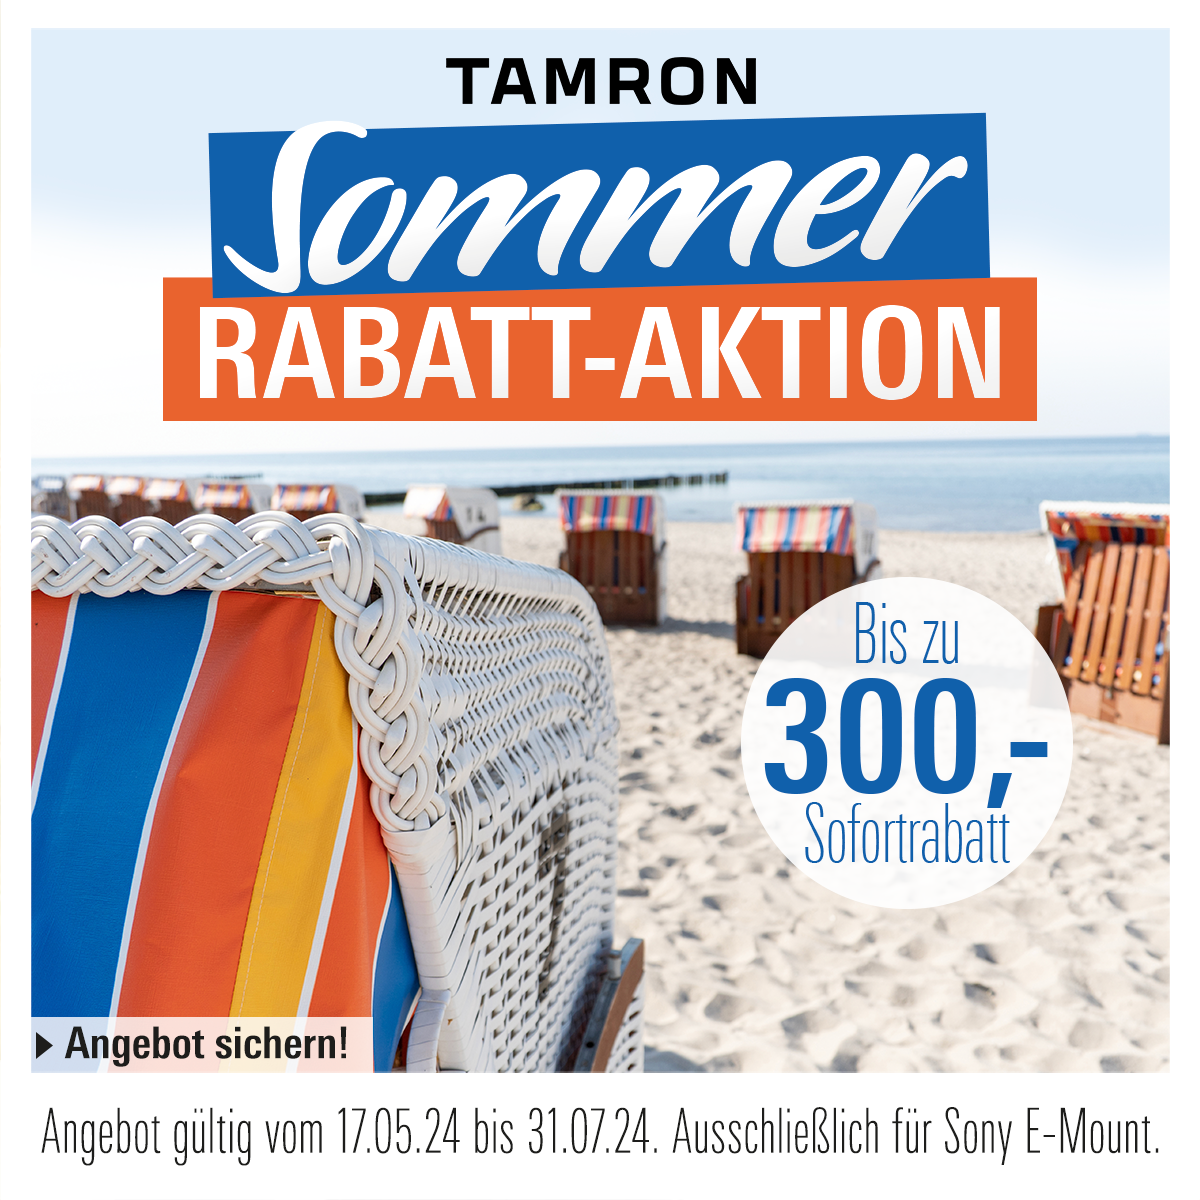 Tamron Sommer Rabatt-Aktion